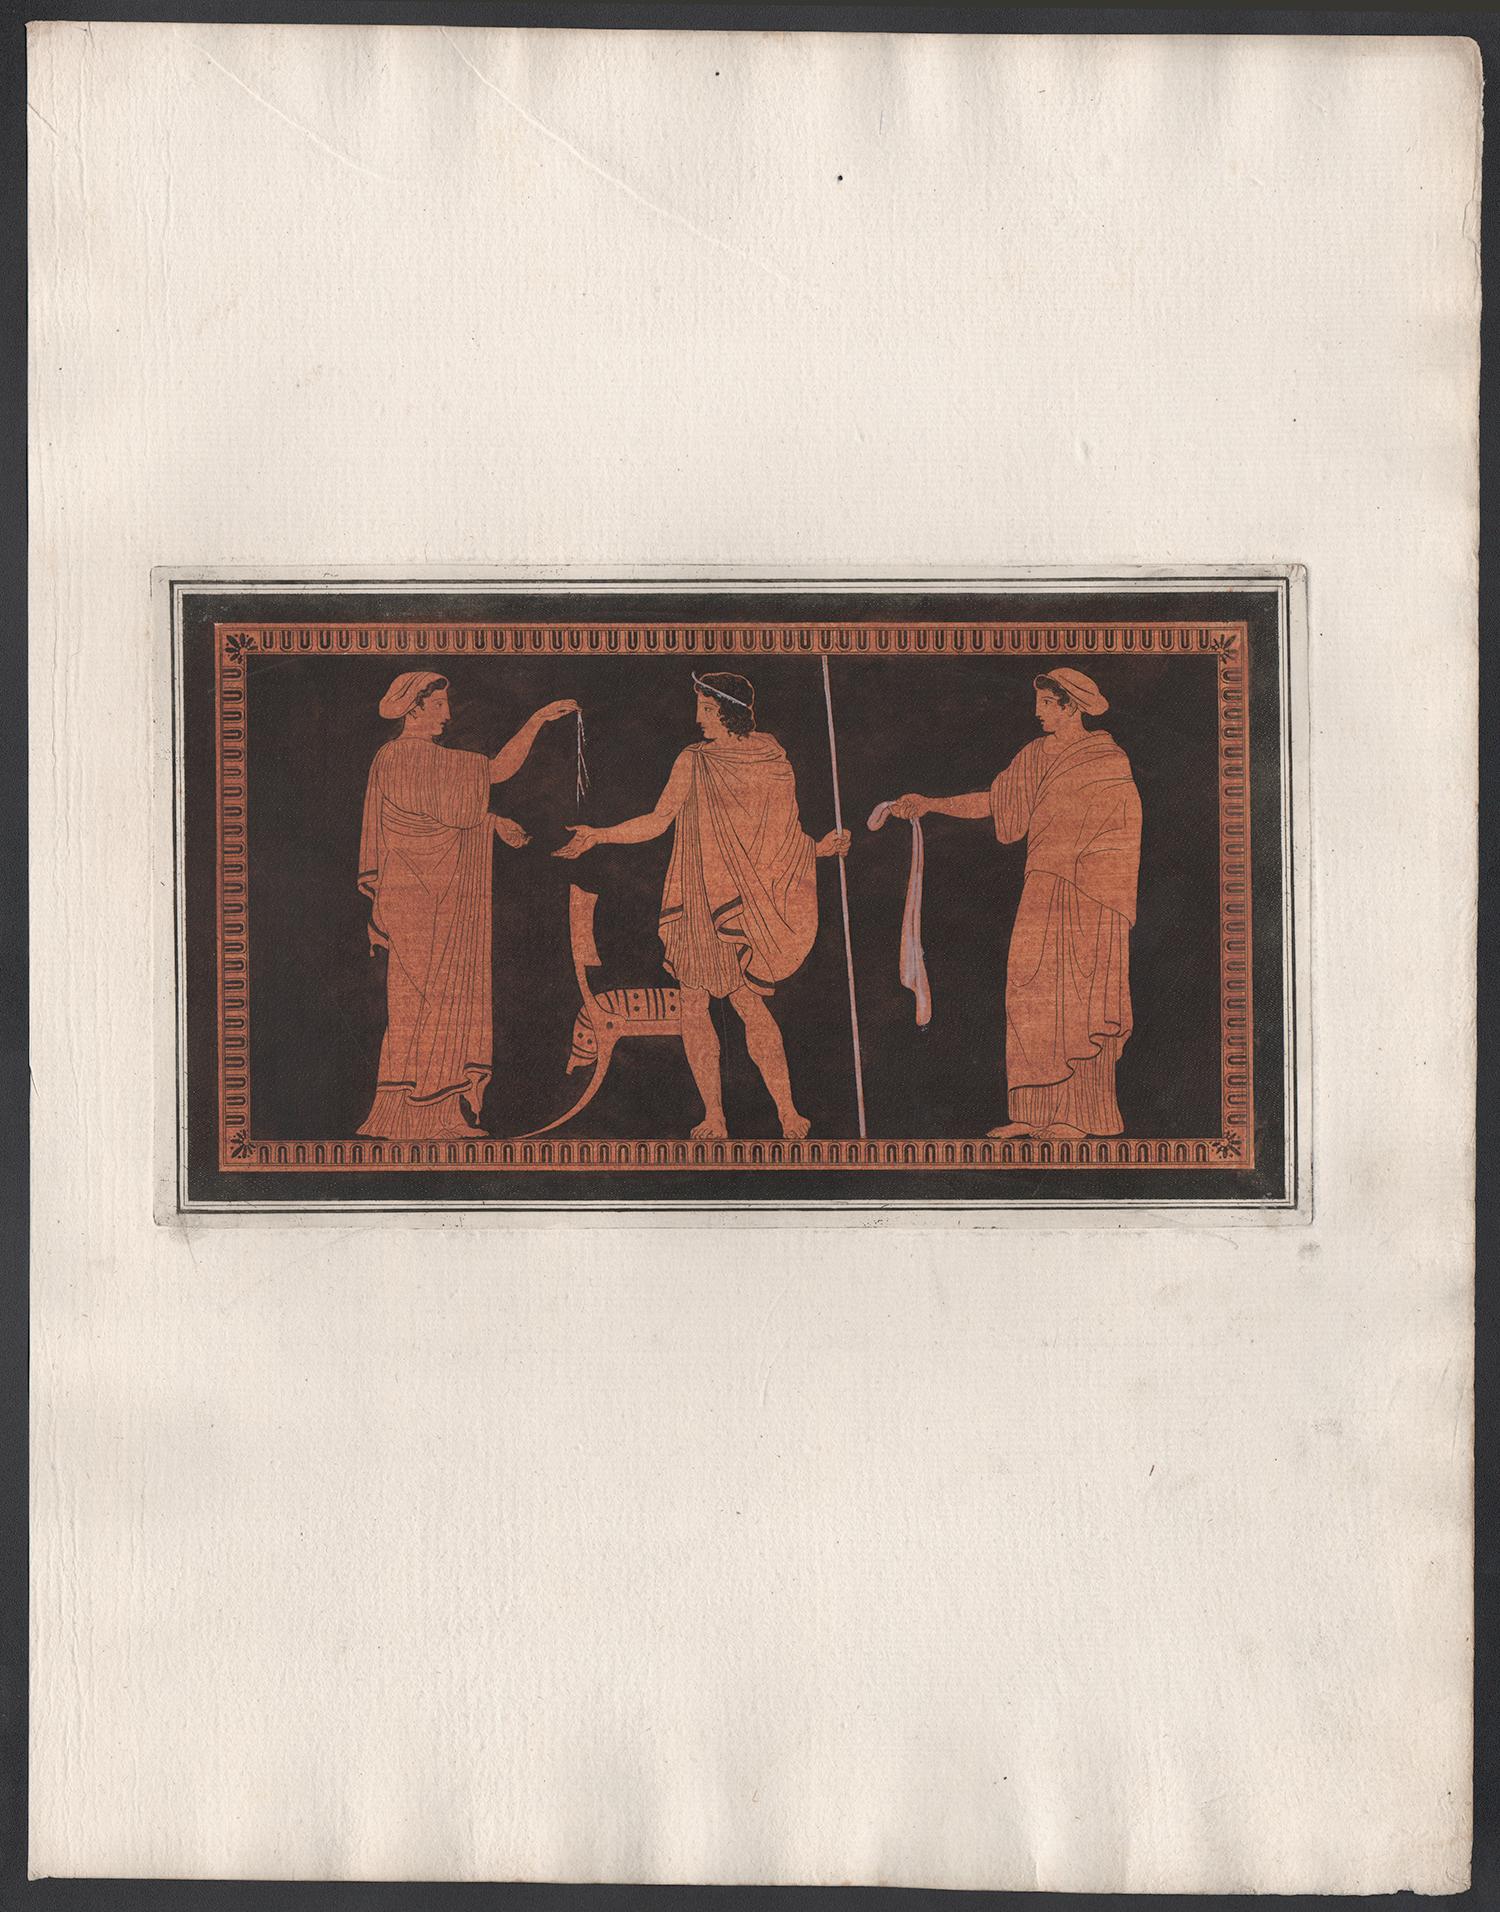 William Hamilton Classical Greek Vase-Painting Engraving - Print by Pierre Francois Hugues D'Hancarville (author)